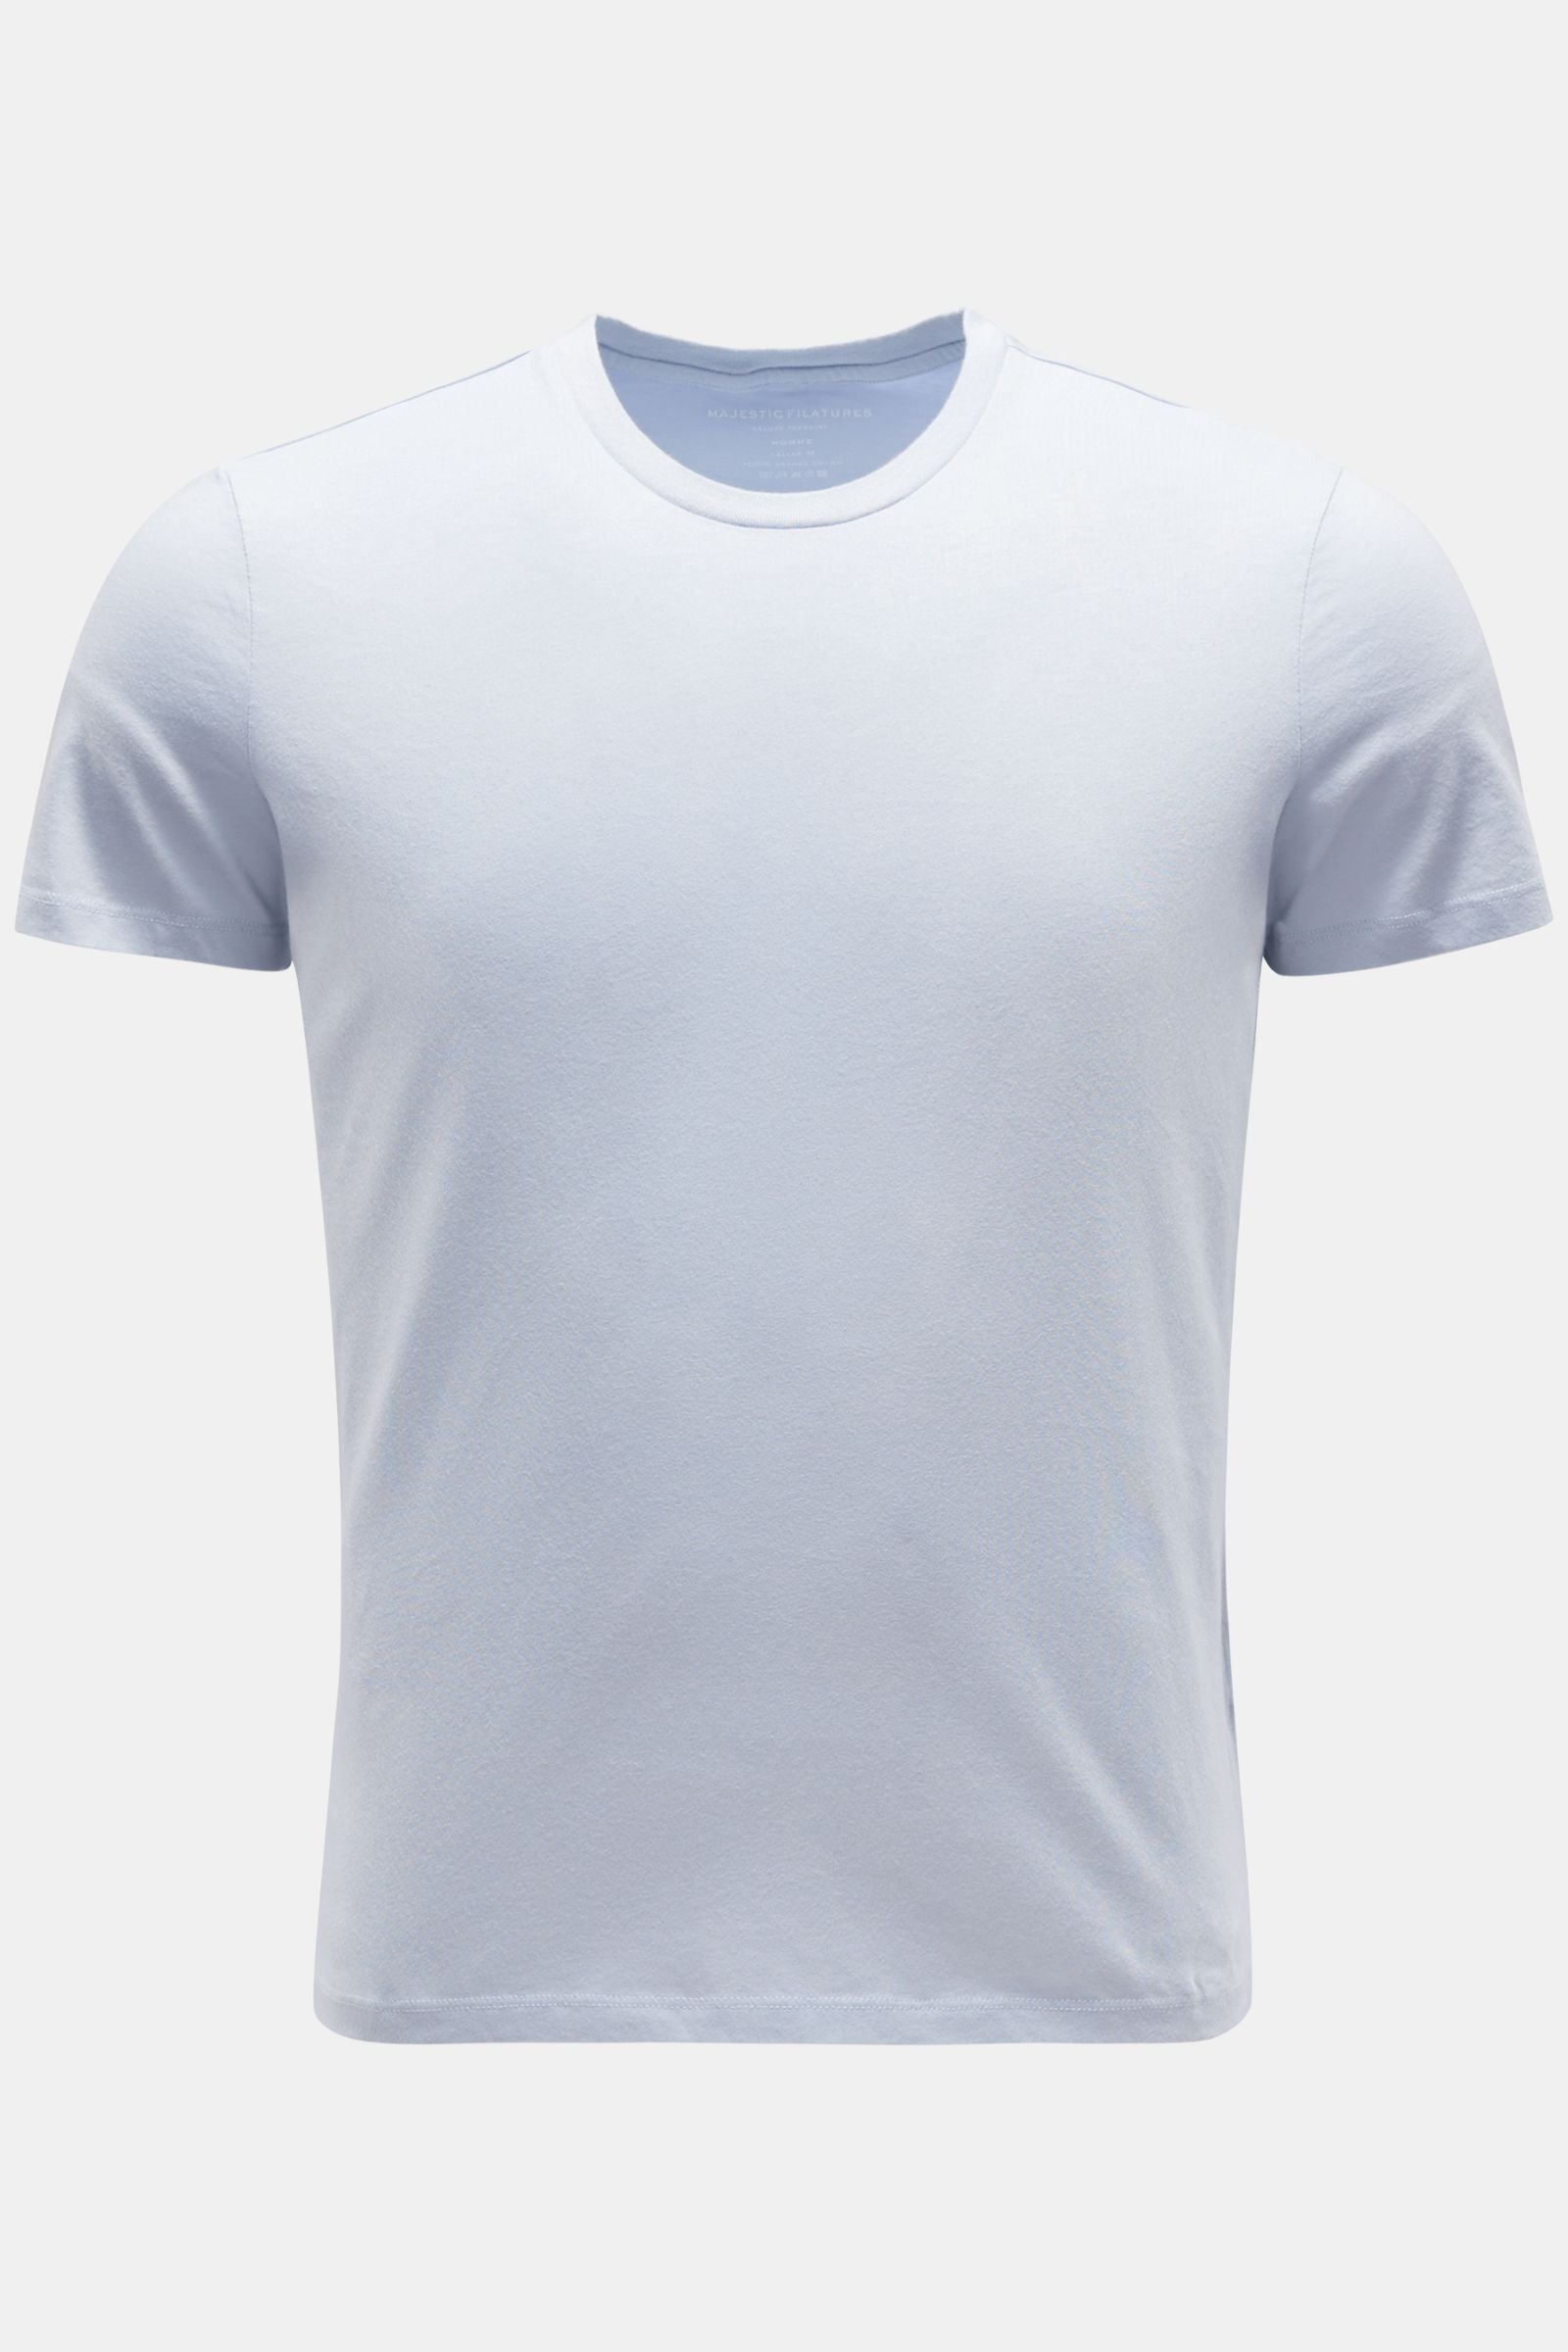 Crew neck T-shirt pastel blue